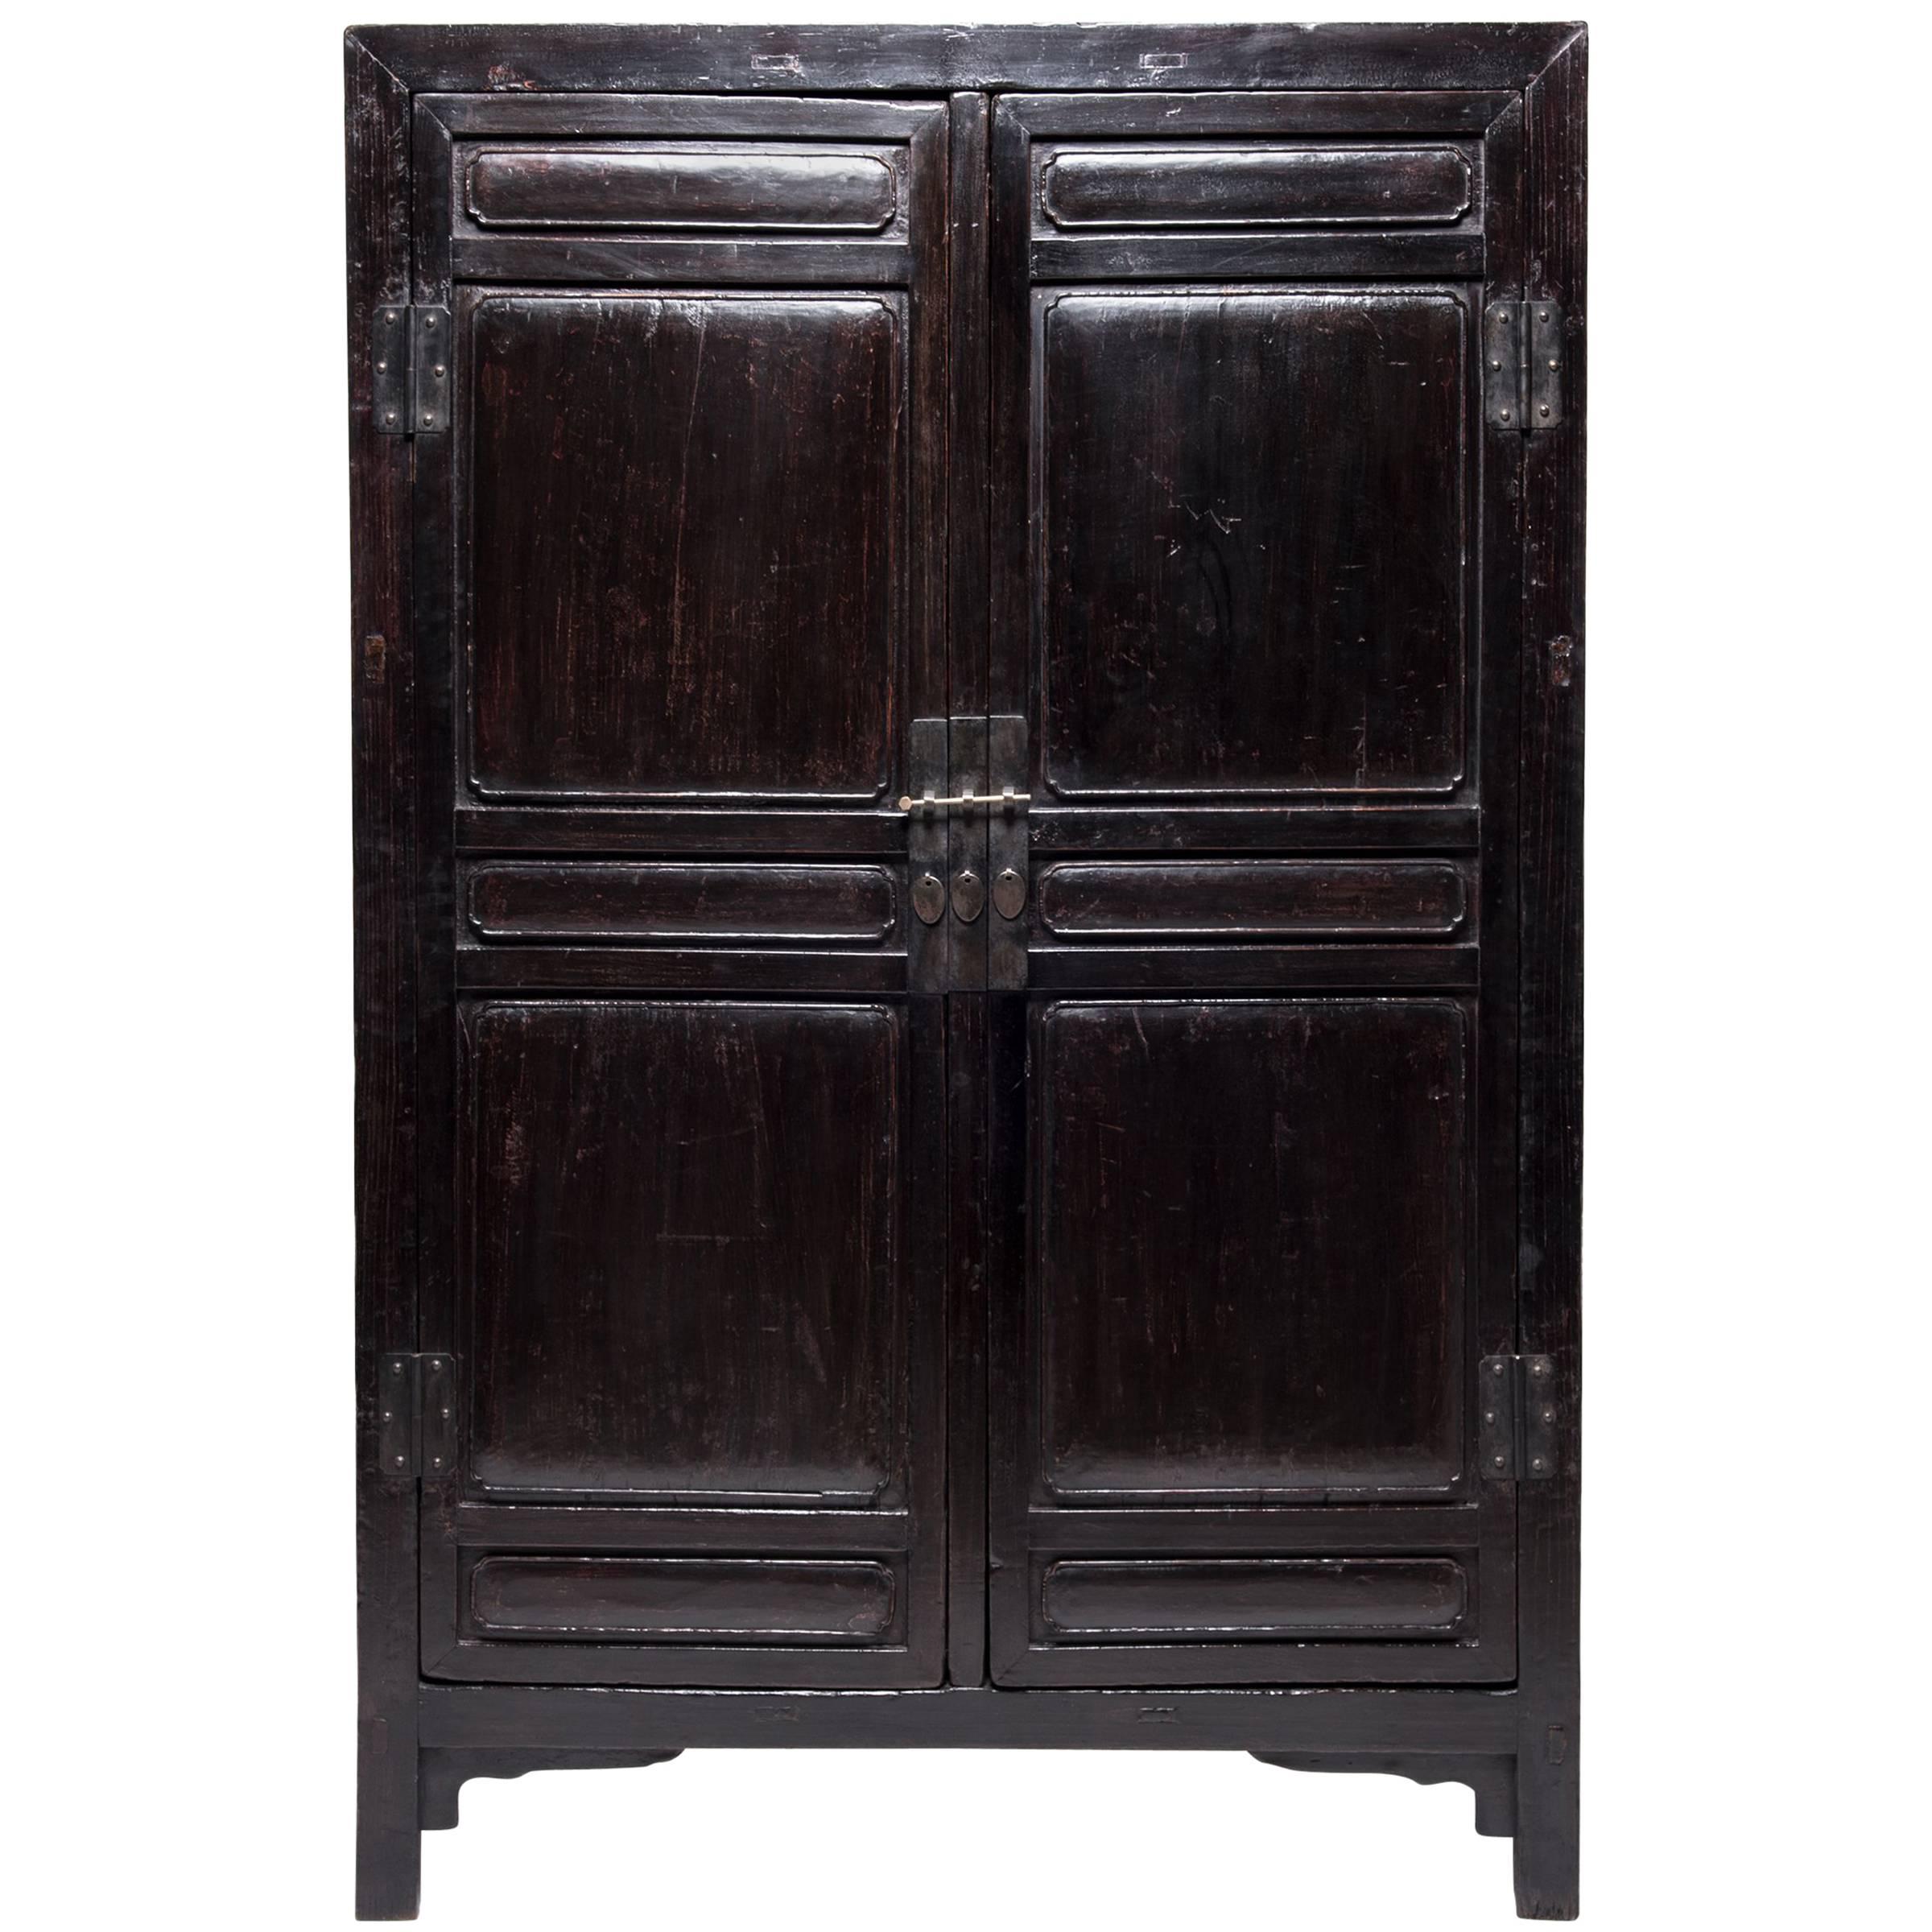 Chinese Two-Door Black Cabinet, c. 1850